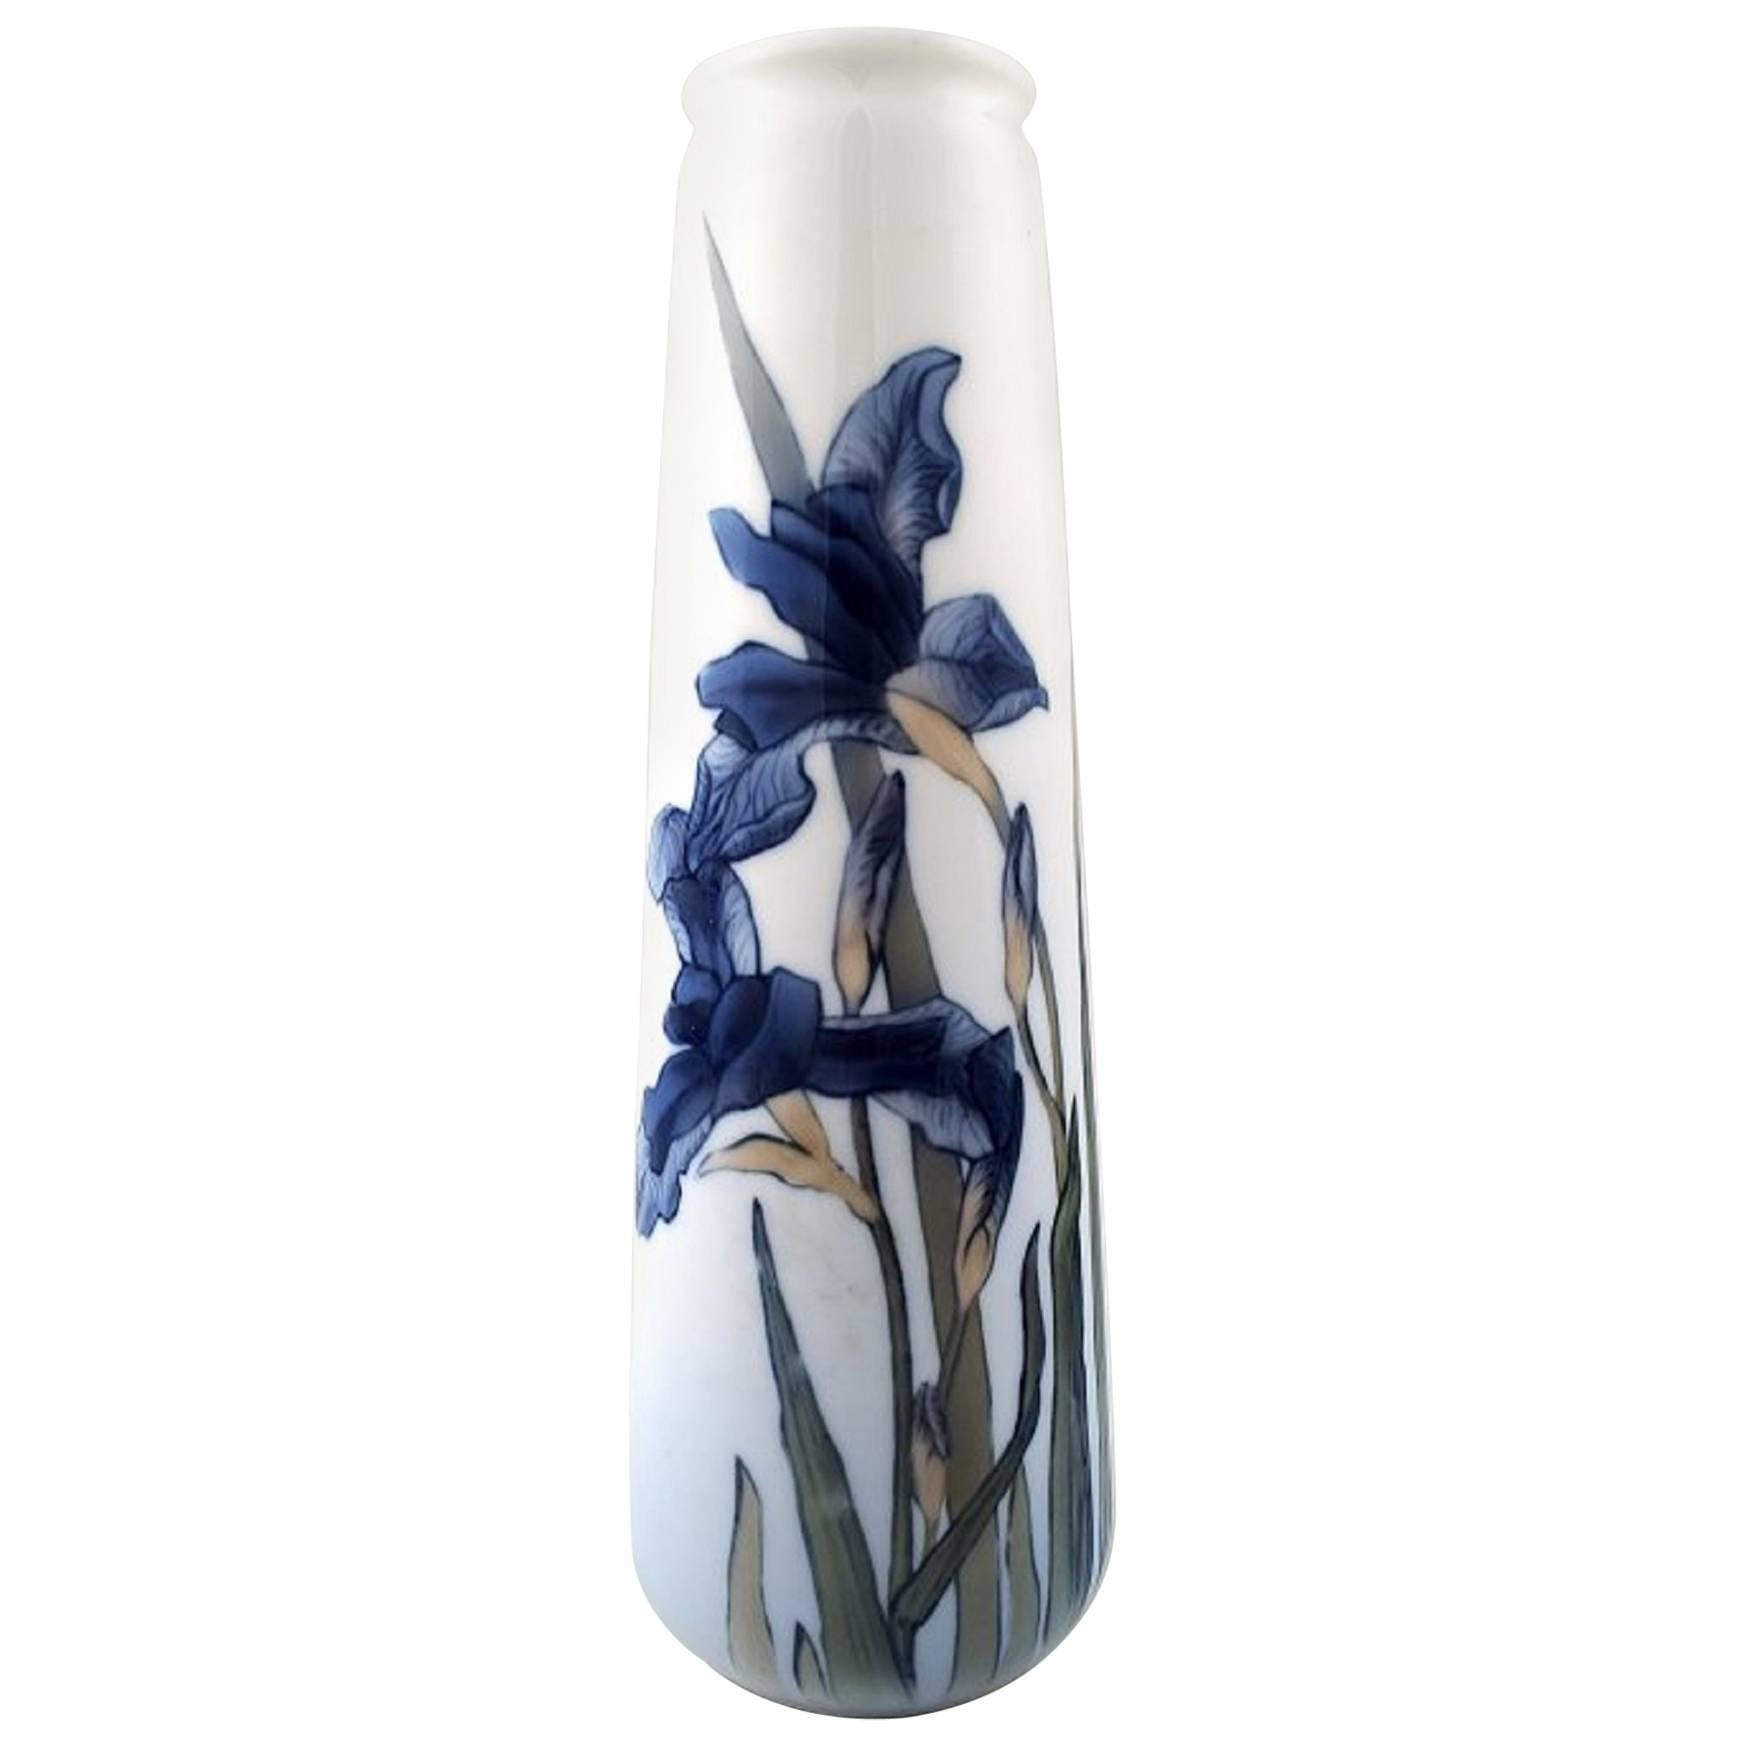 B & G / Bing & Grondahl Art Nouveau vase decorated with flowers